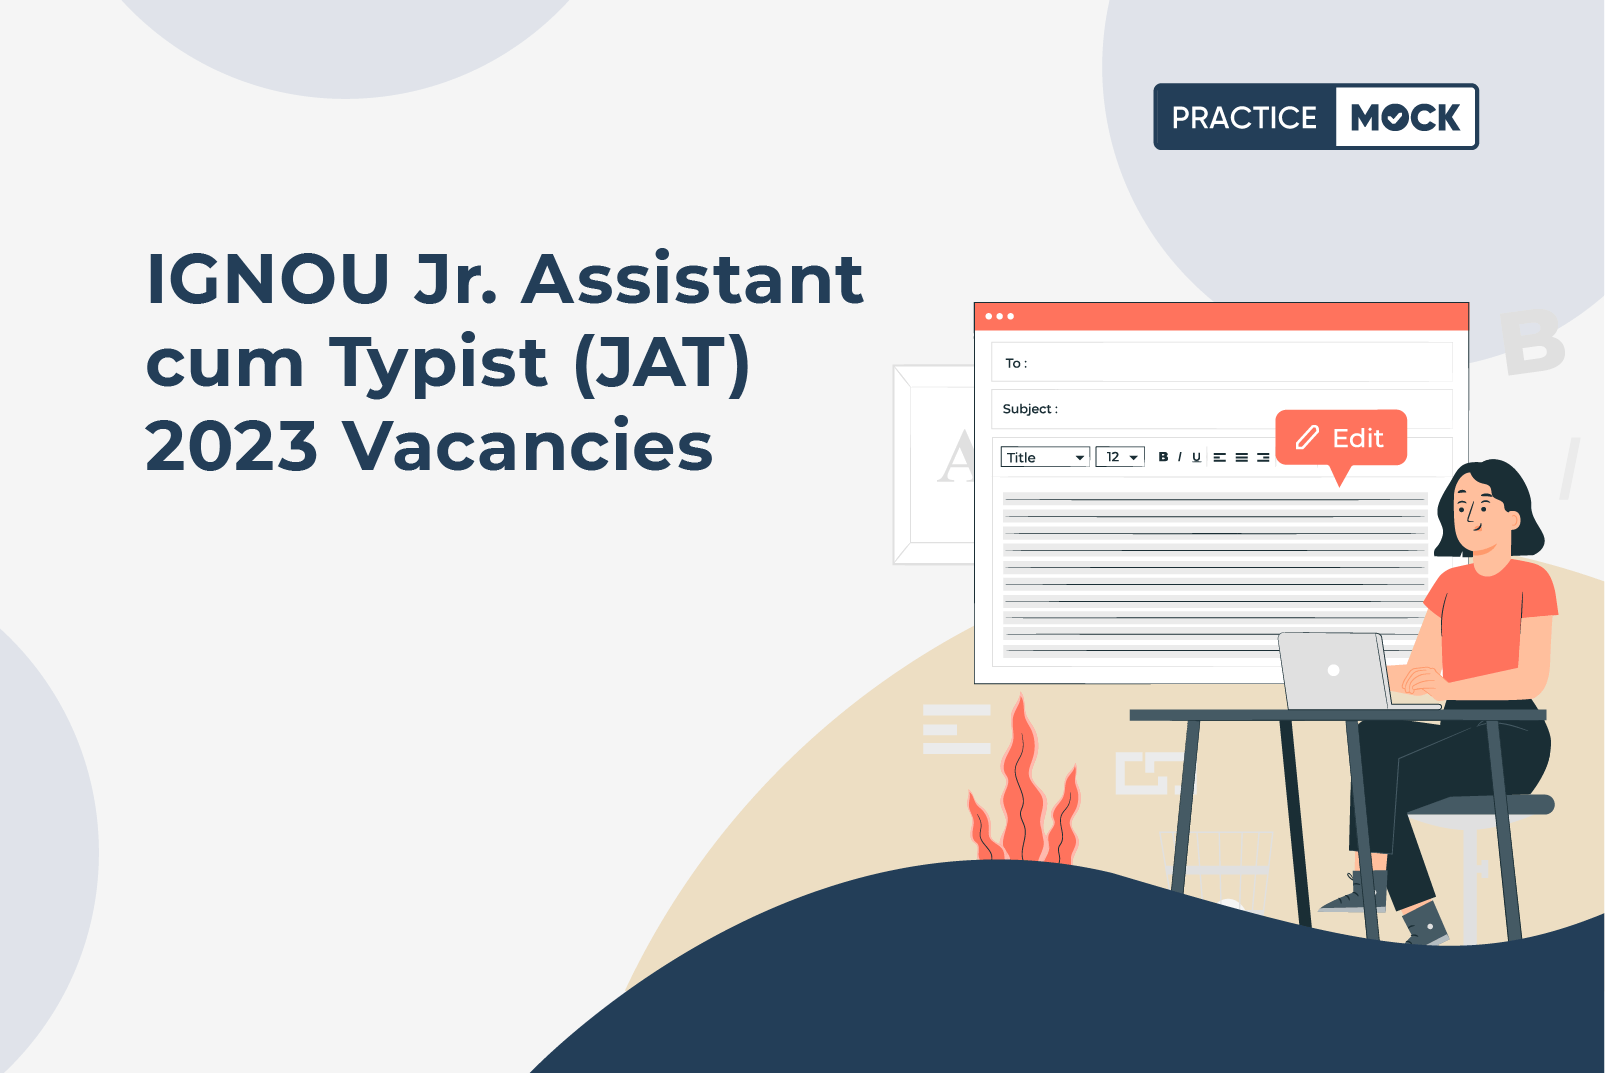 IGNOU Jr. Assistant cum Typist (JAT) 2023 Vacancies